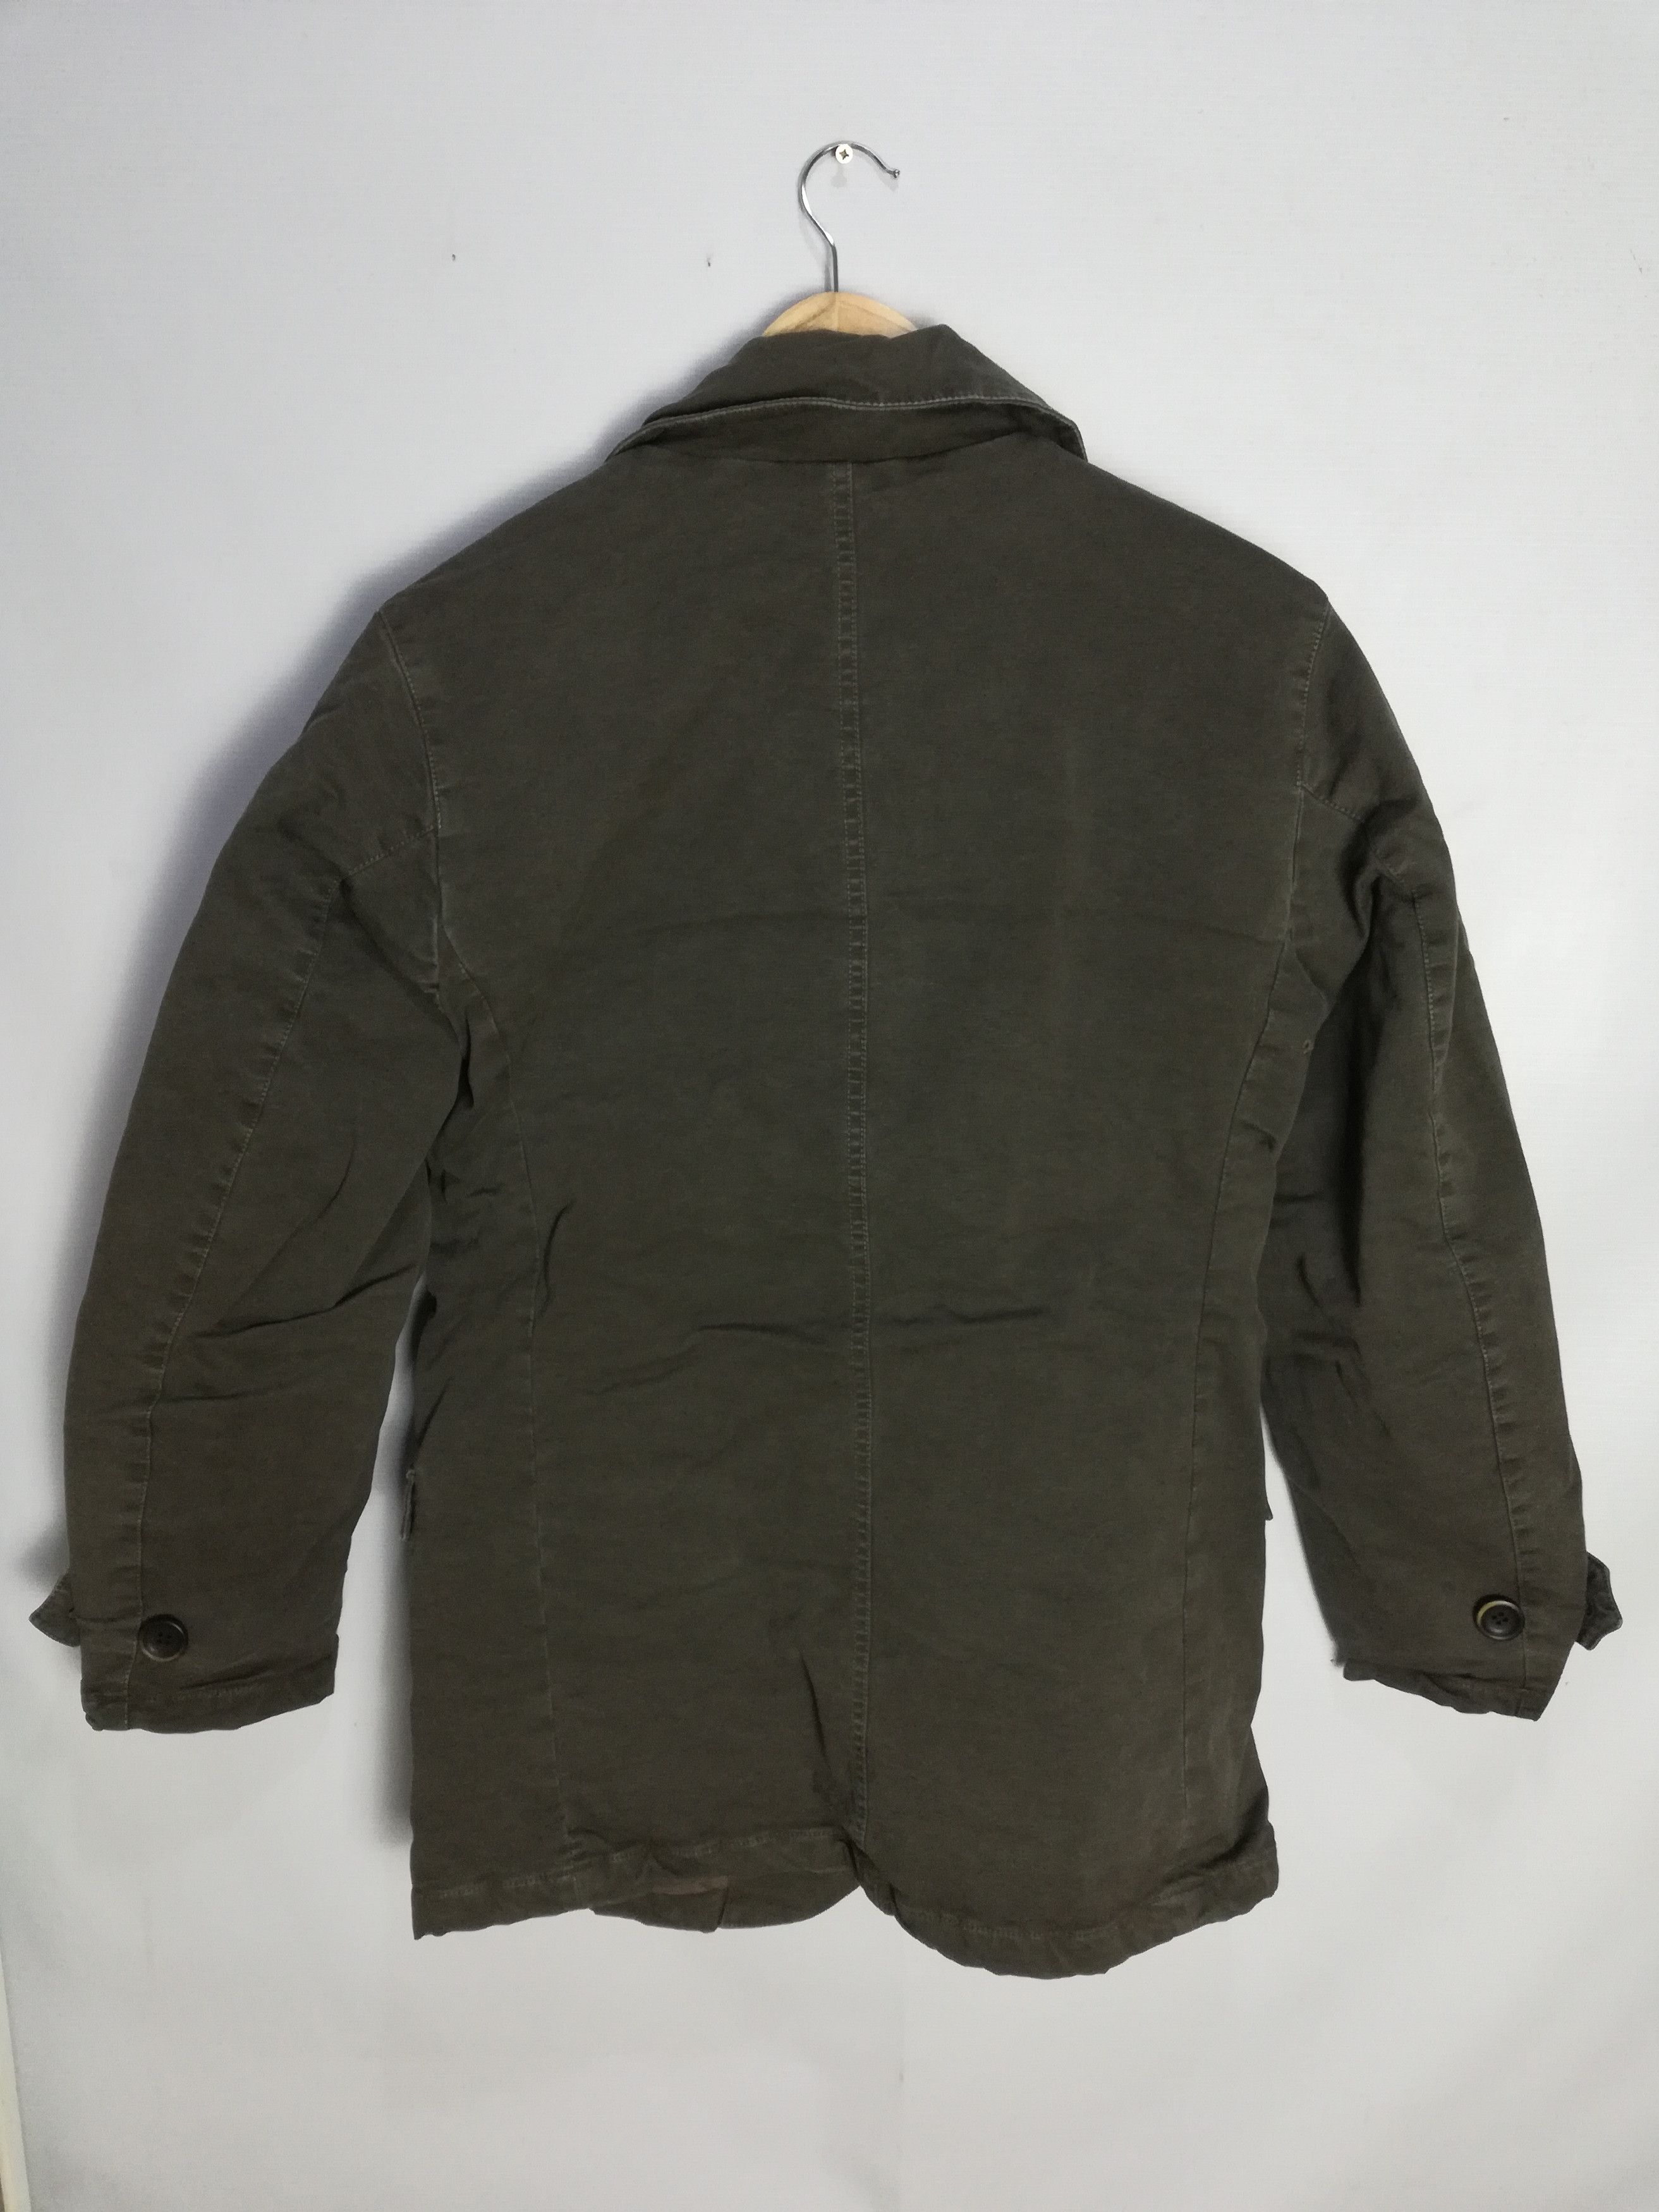 paul smith military cotton m65 jacket - 8